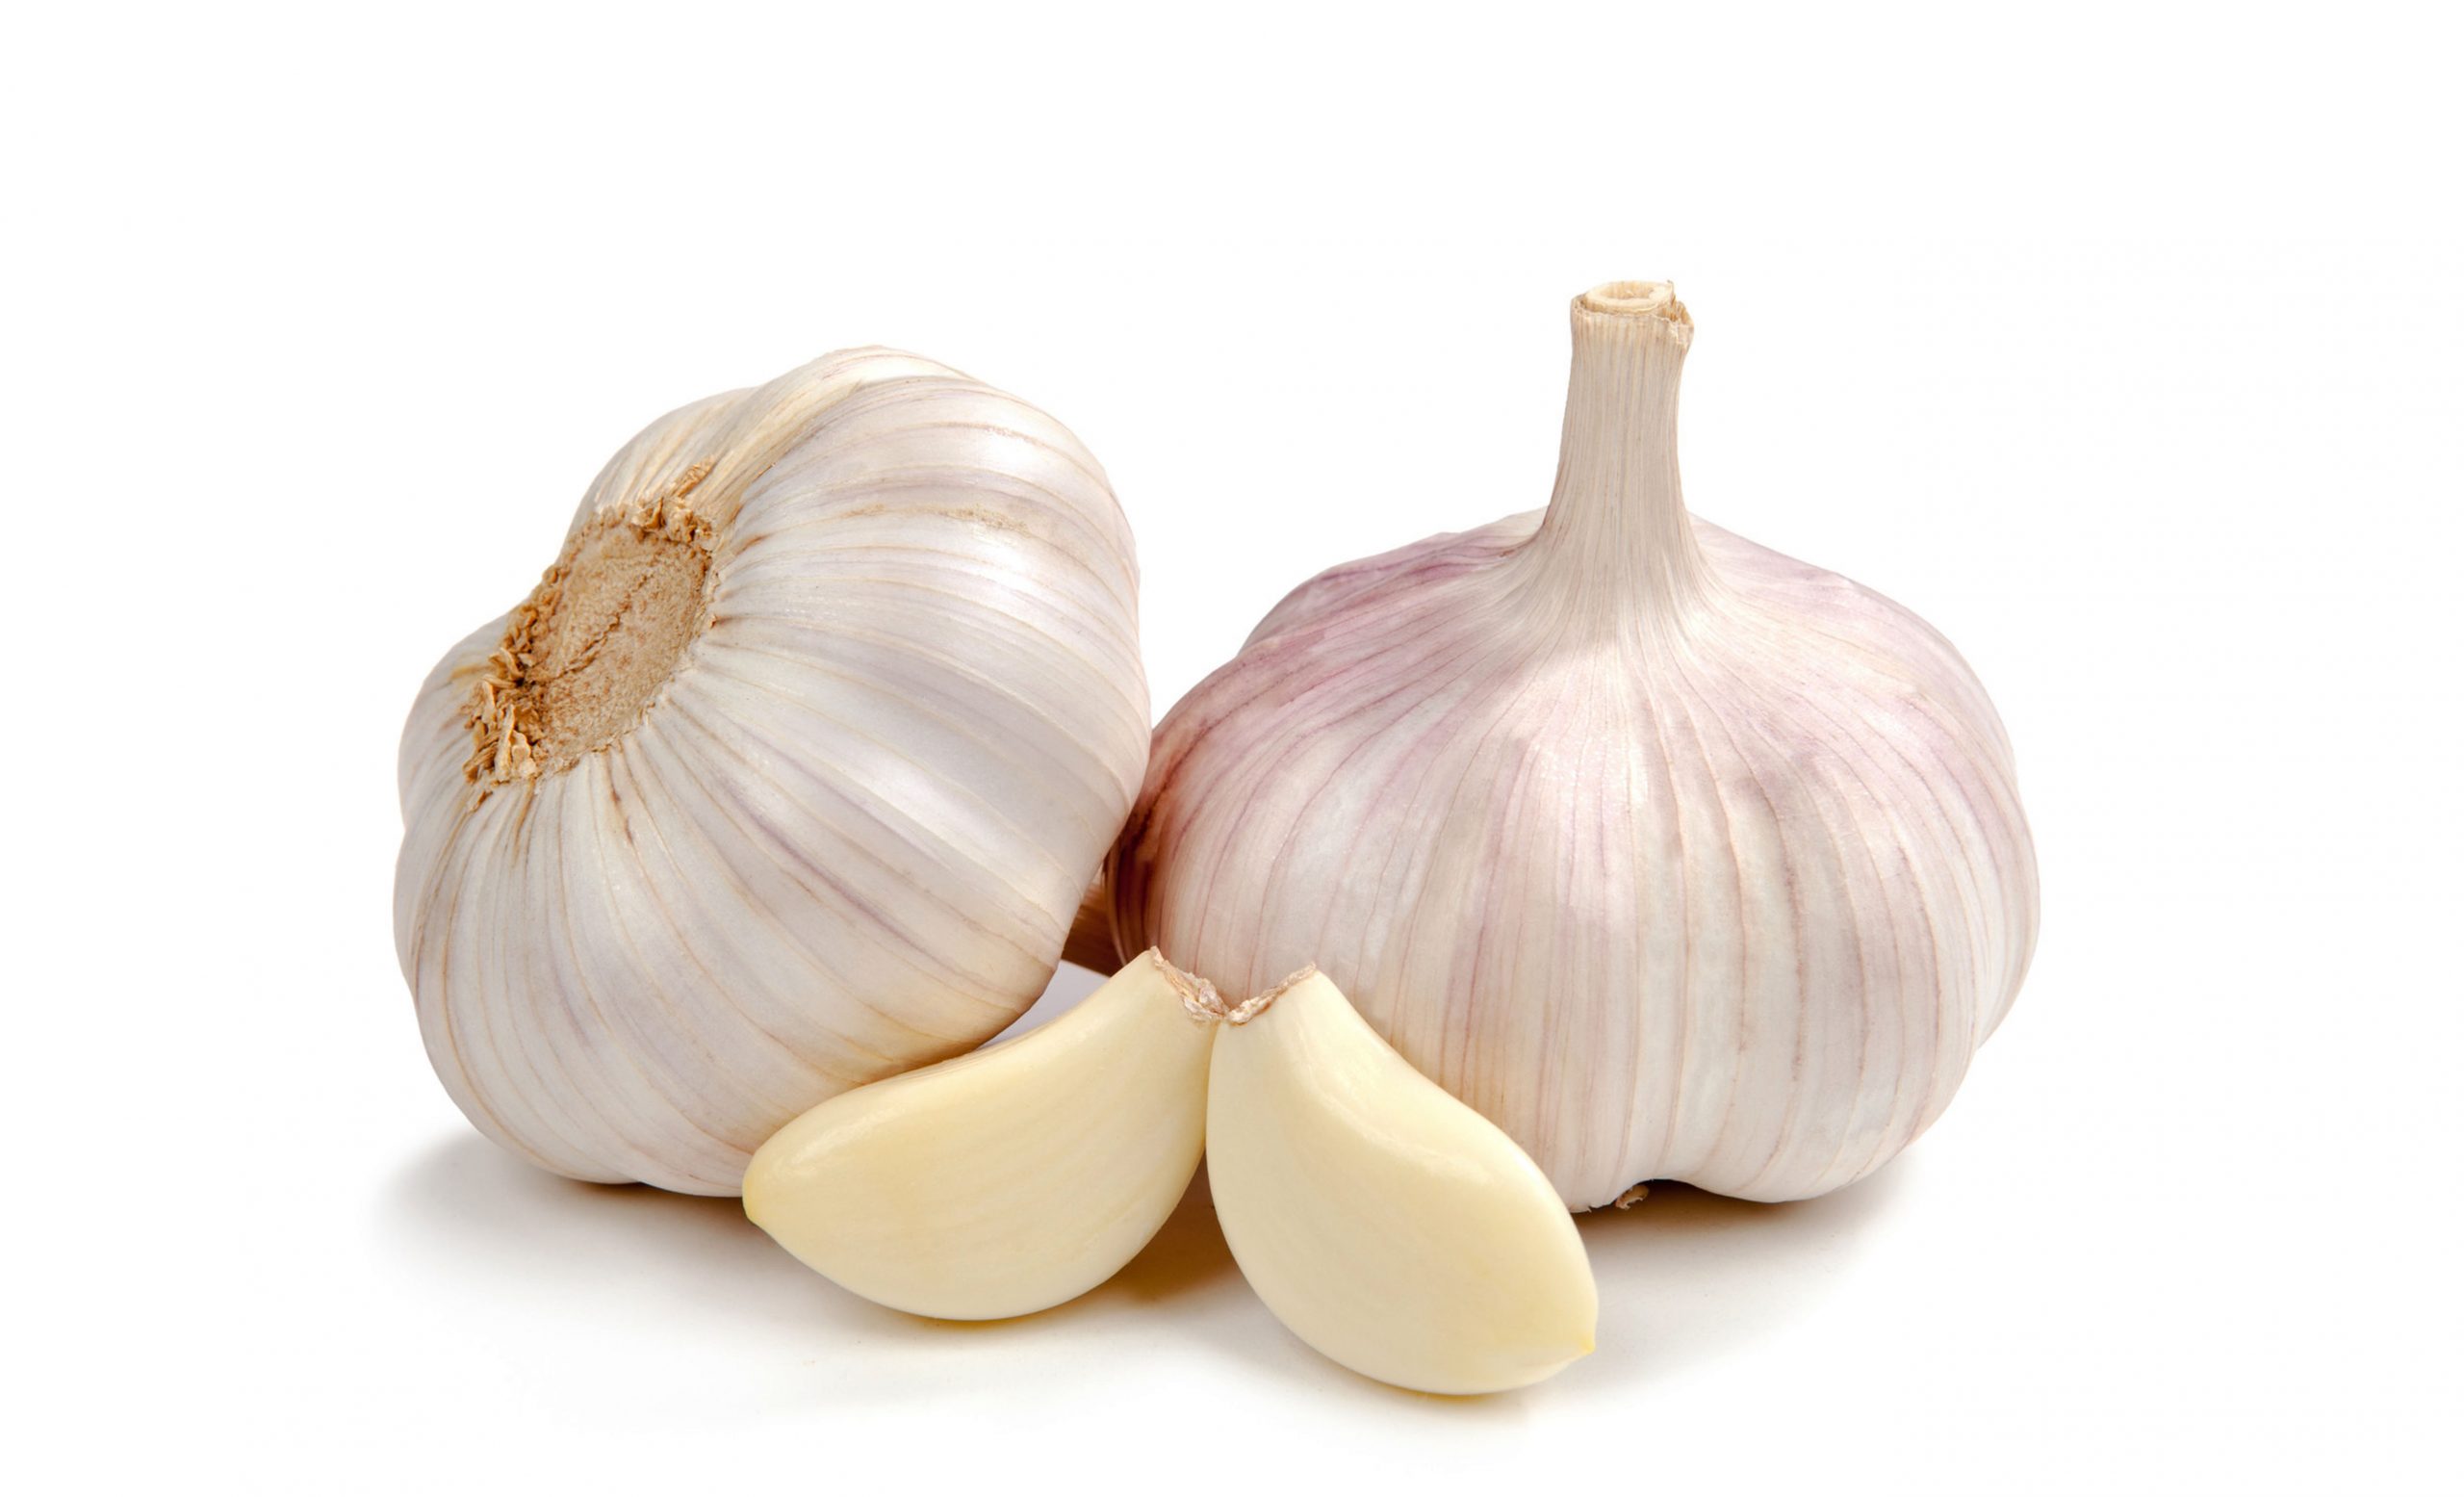 Garlic, the Mosquito Repellent